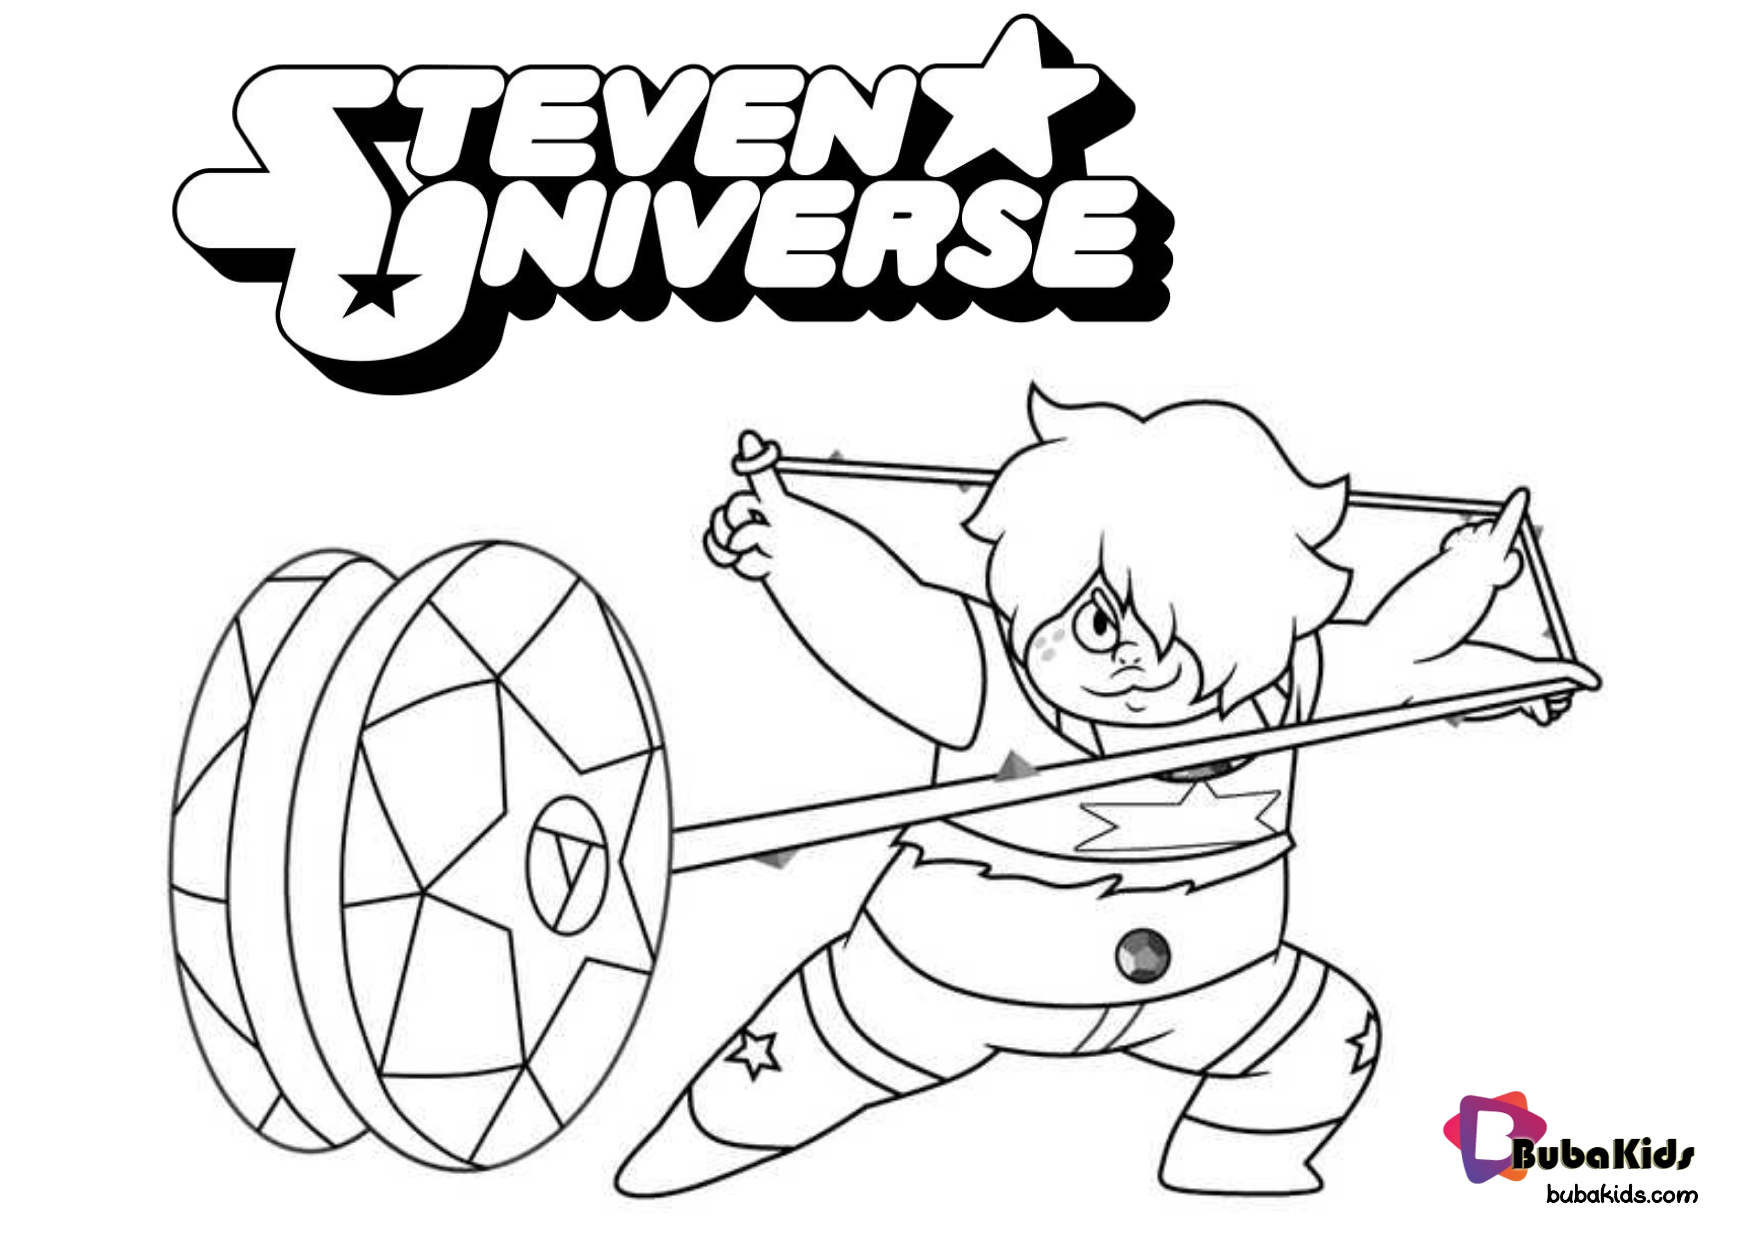 Smoky Quartz Steven Universe coloring page.